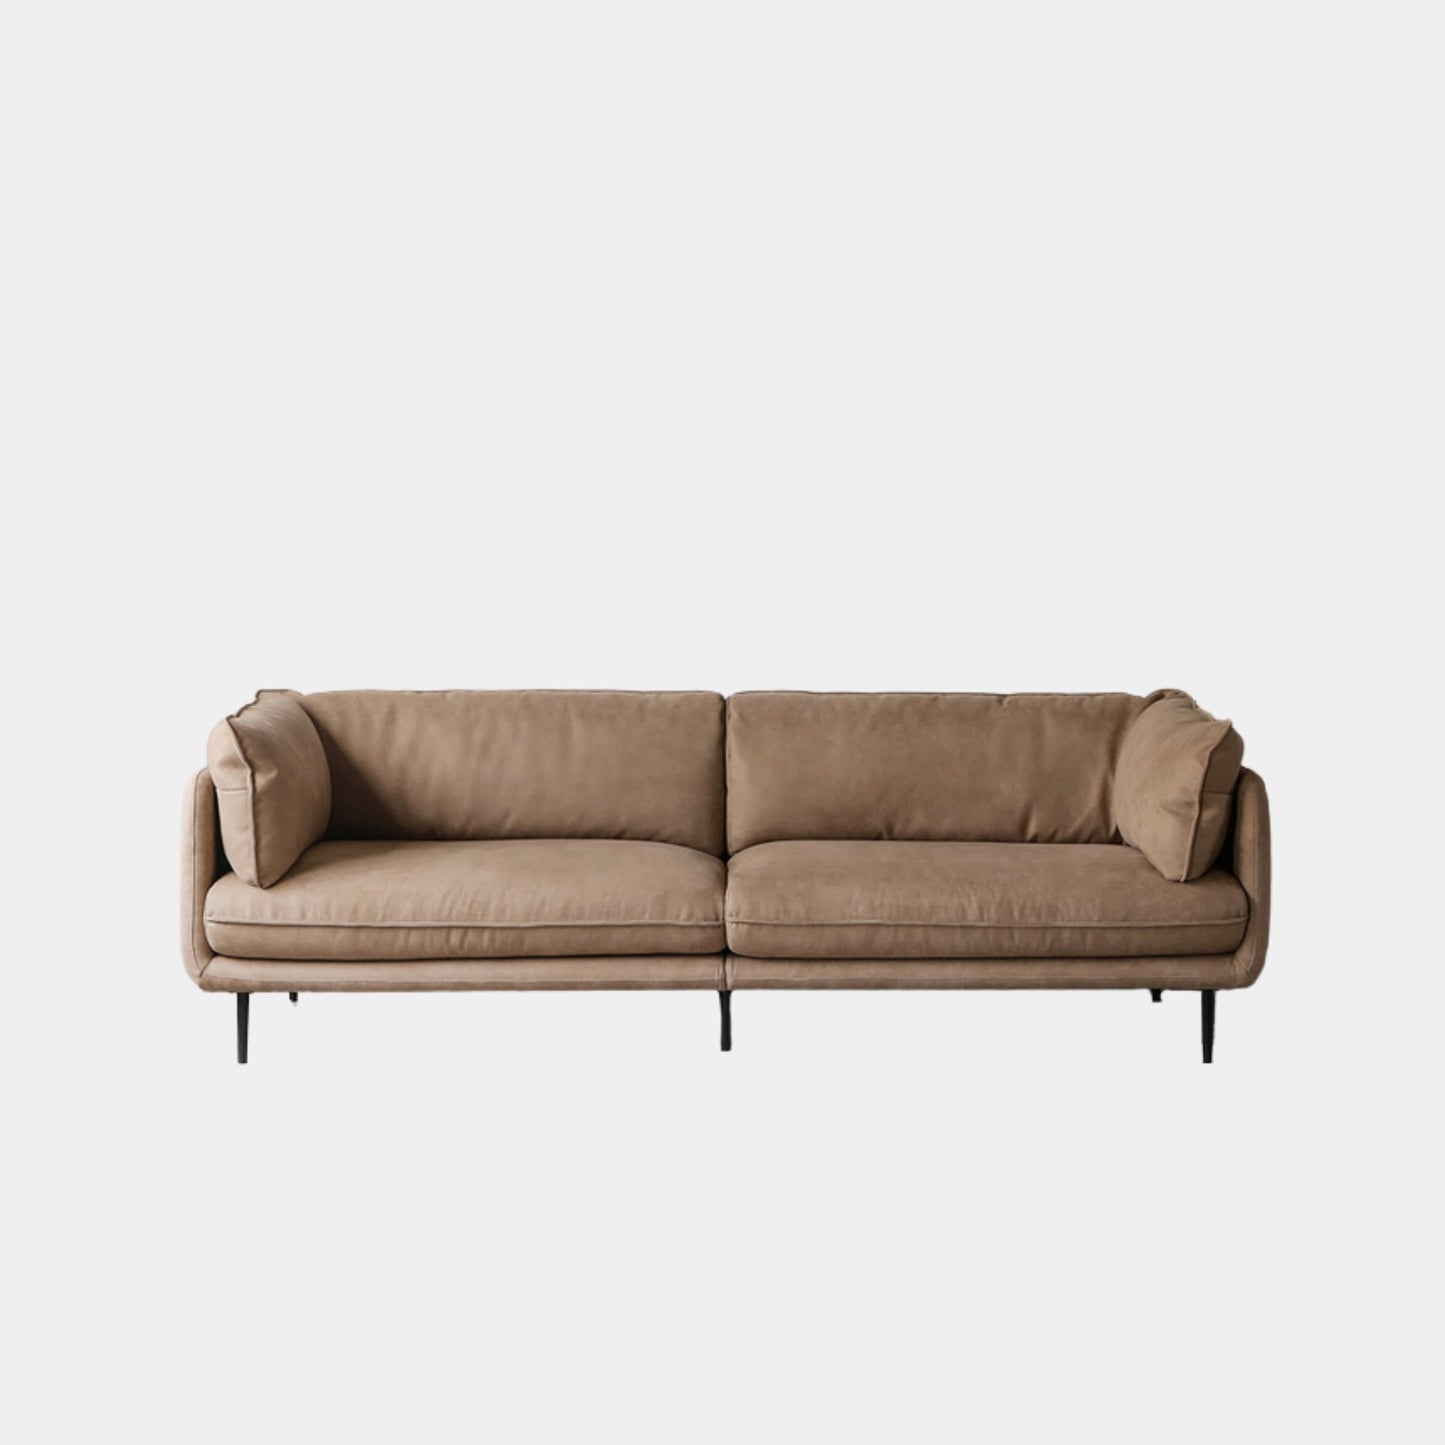 Cuddle brown fabric sofa